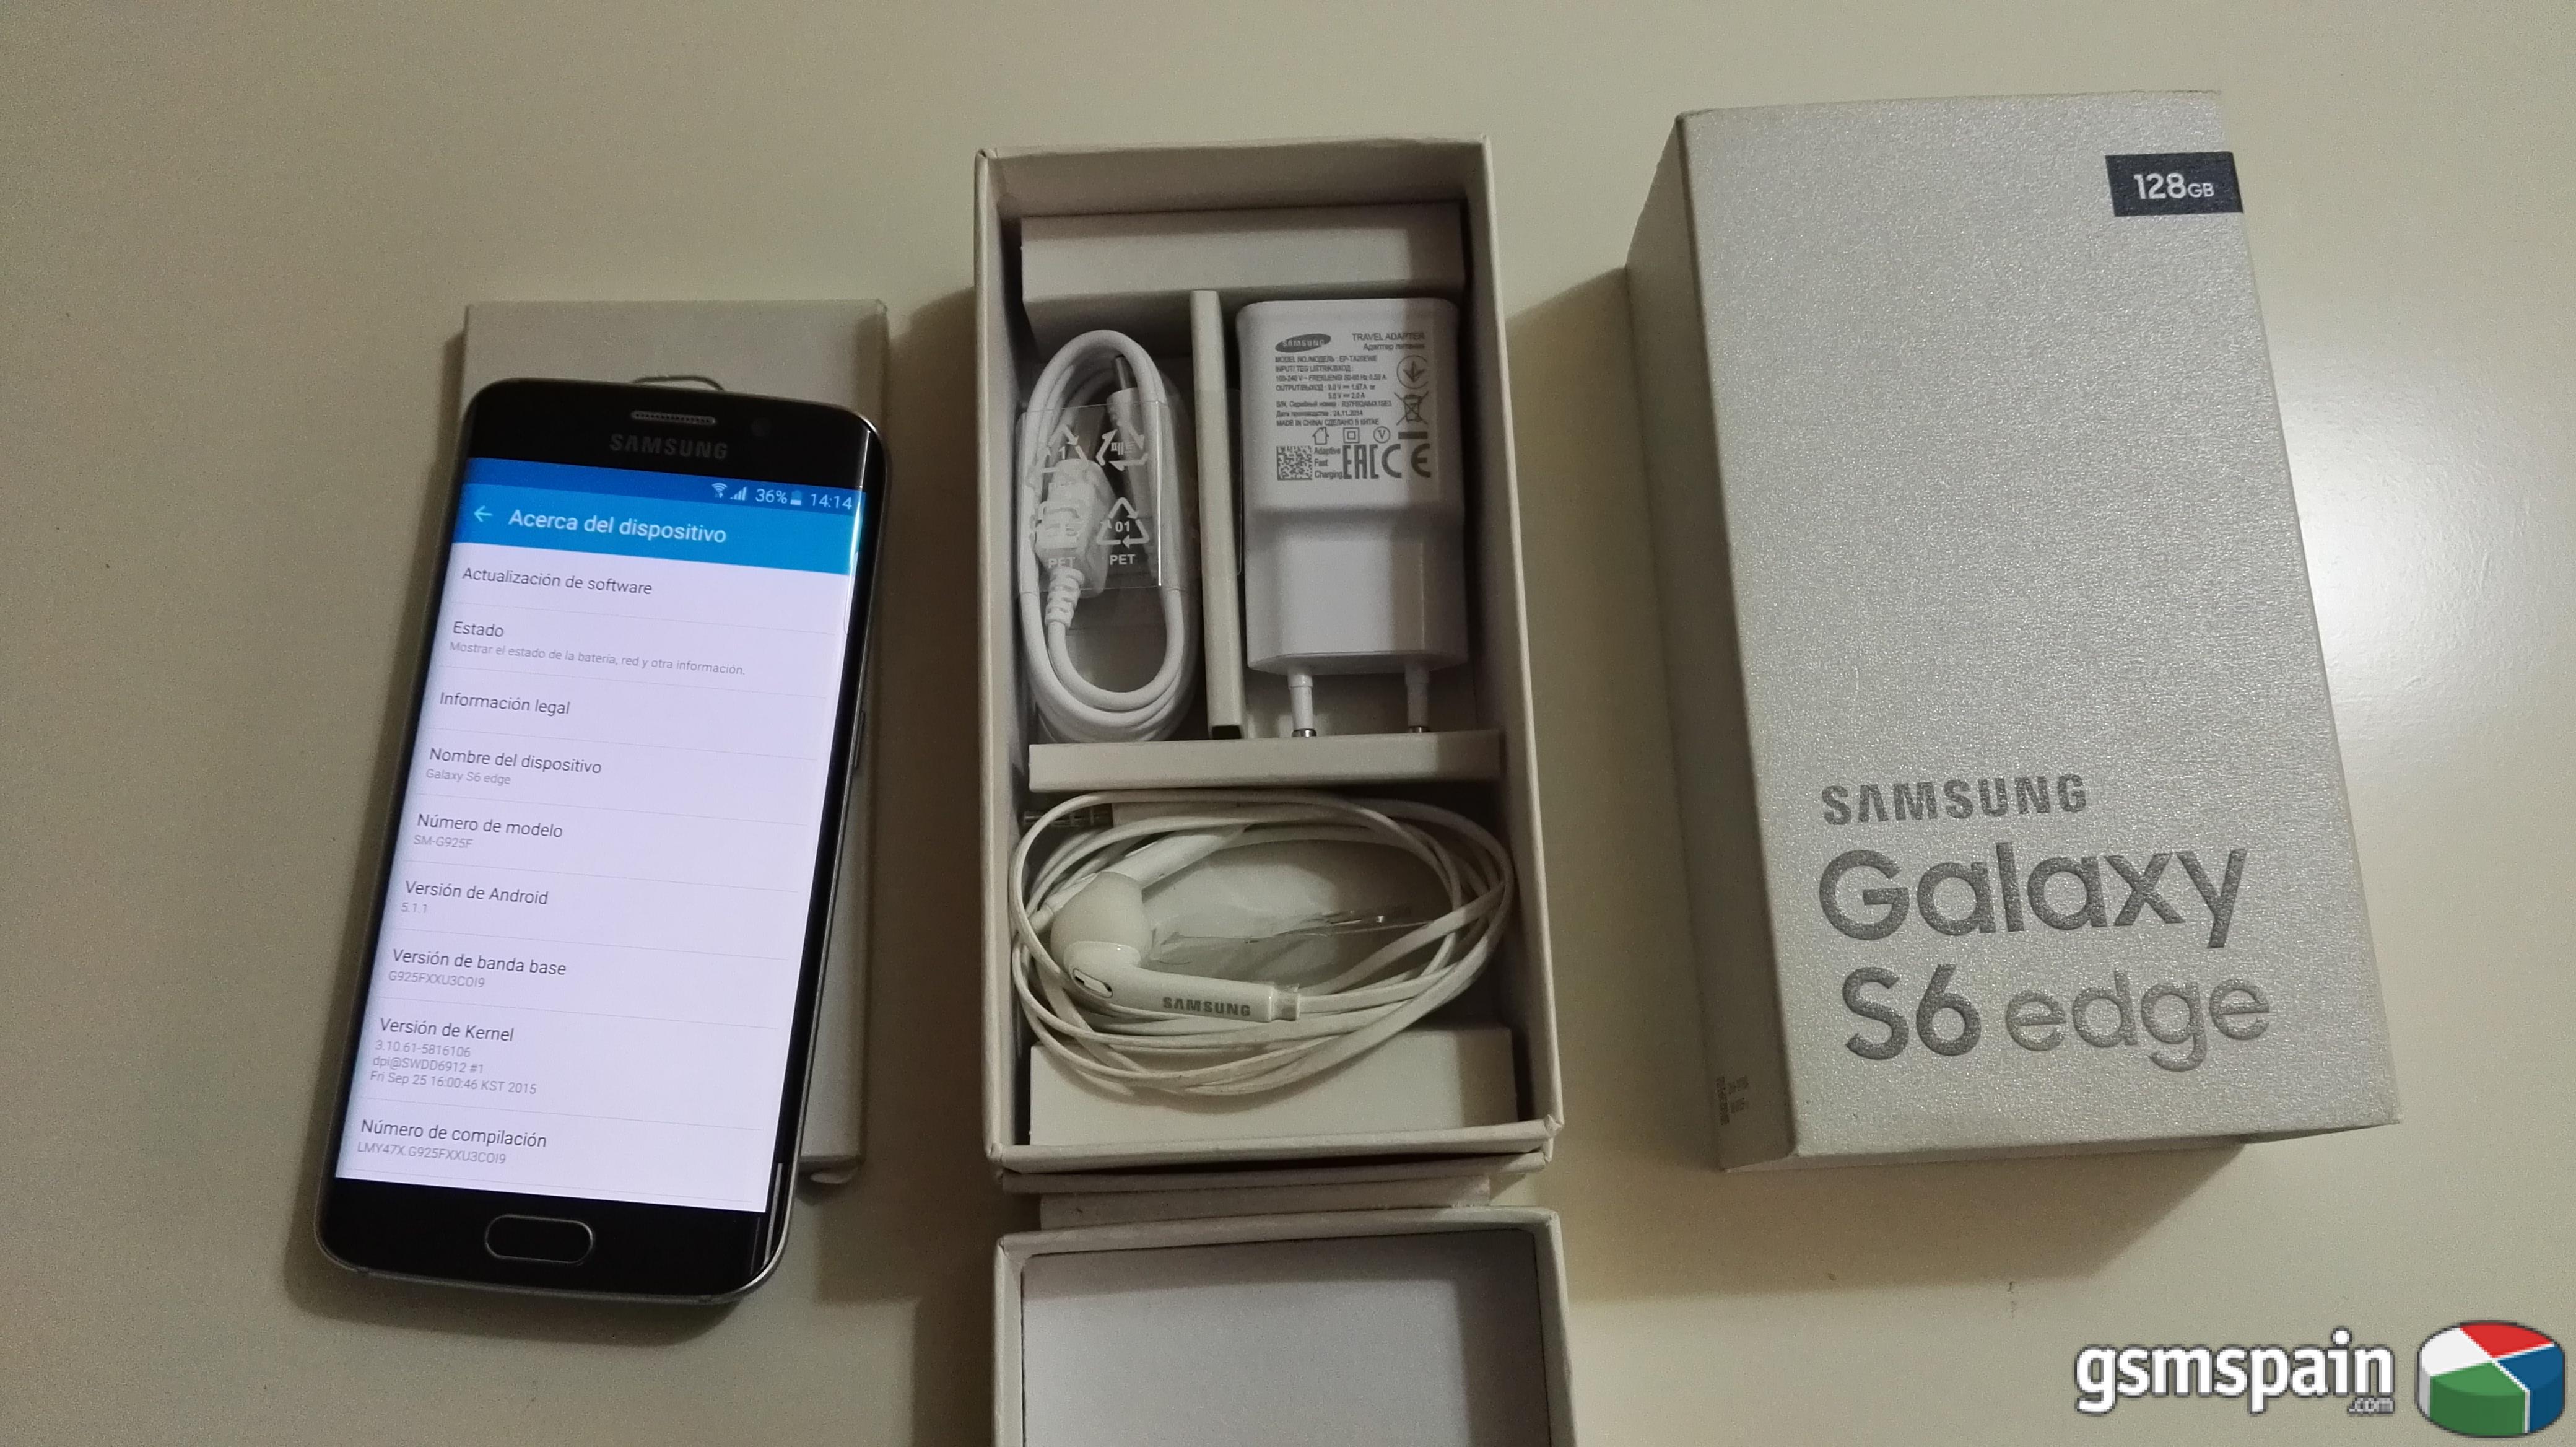 [VENDO] Samsung Galaxy S6 Edge 128GB libre